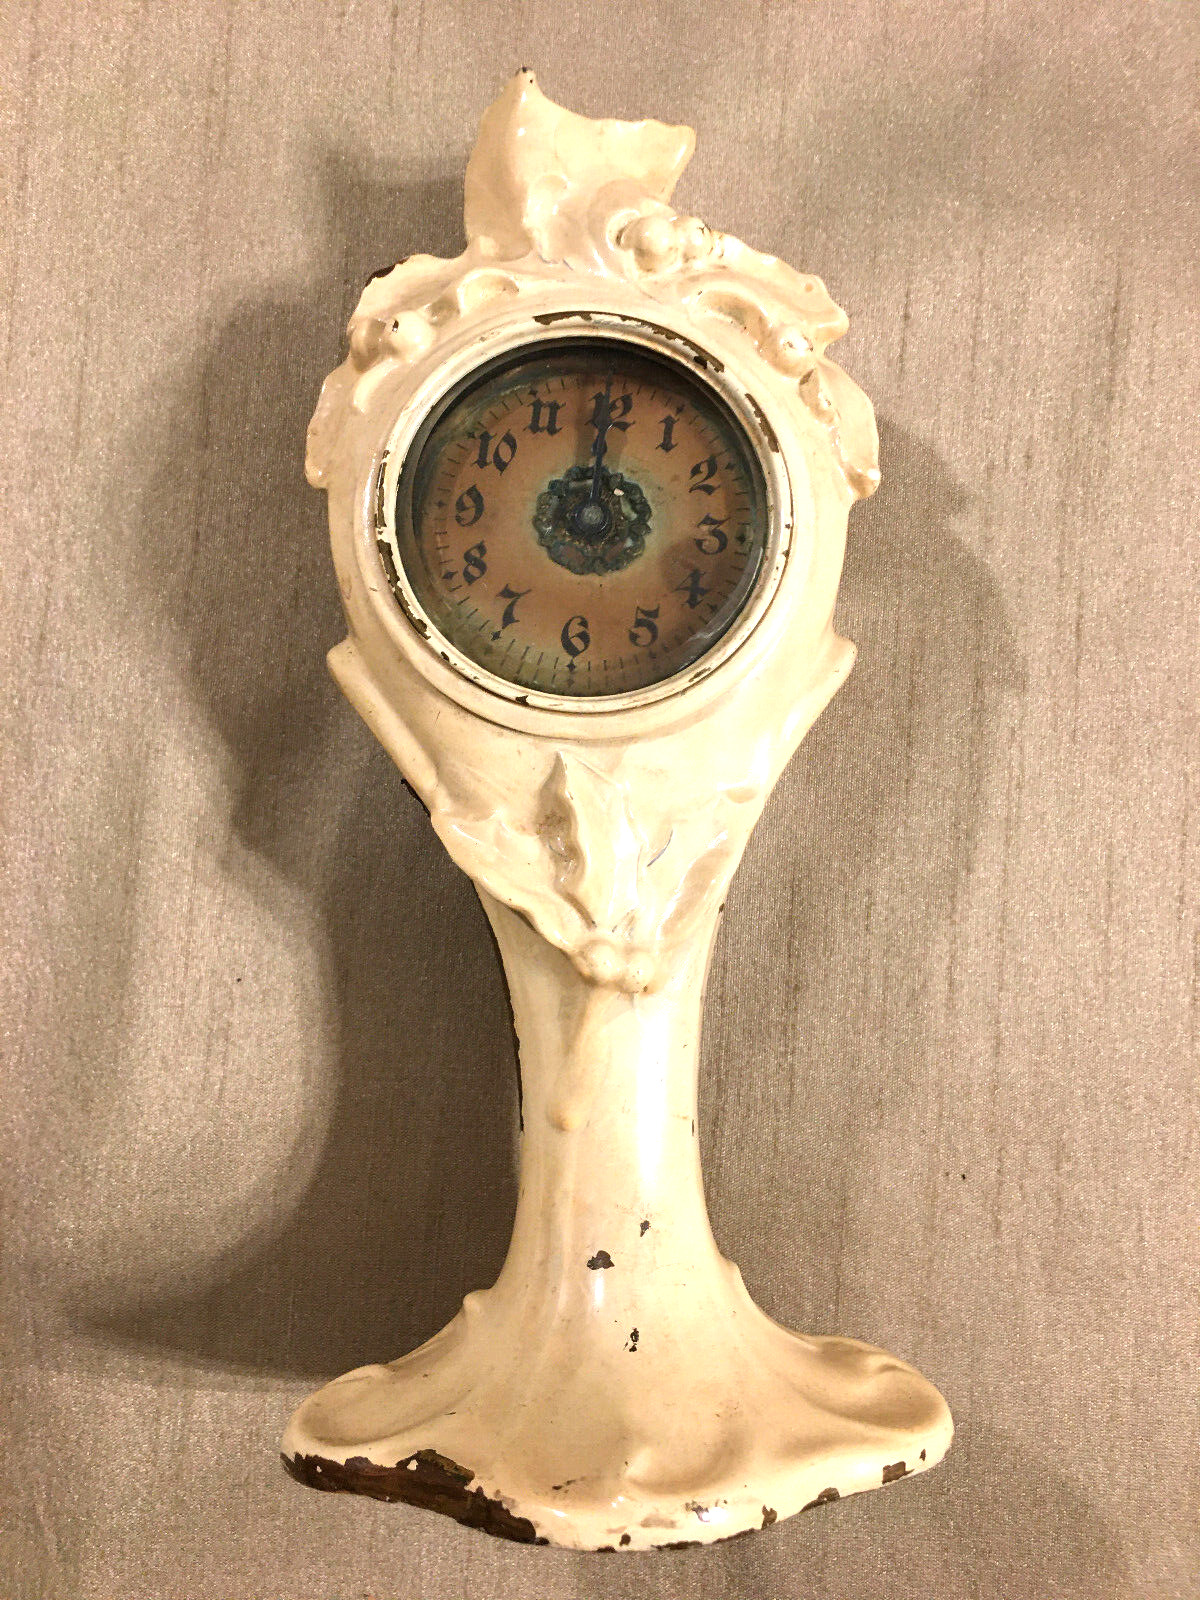 Cute Antique wind up clock - not working